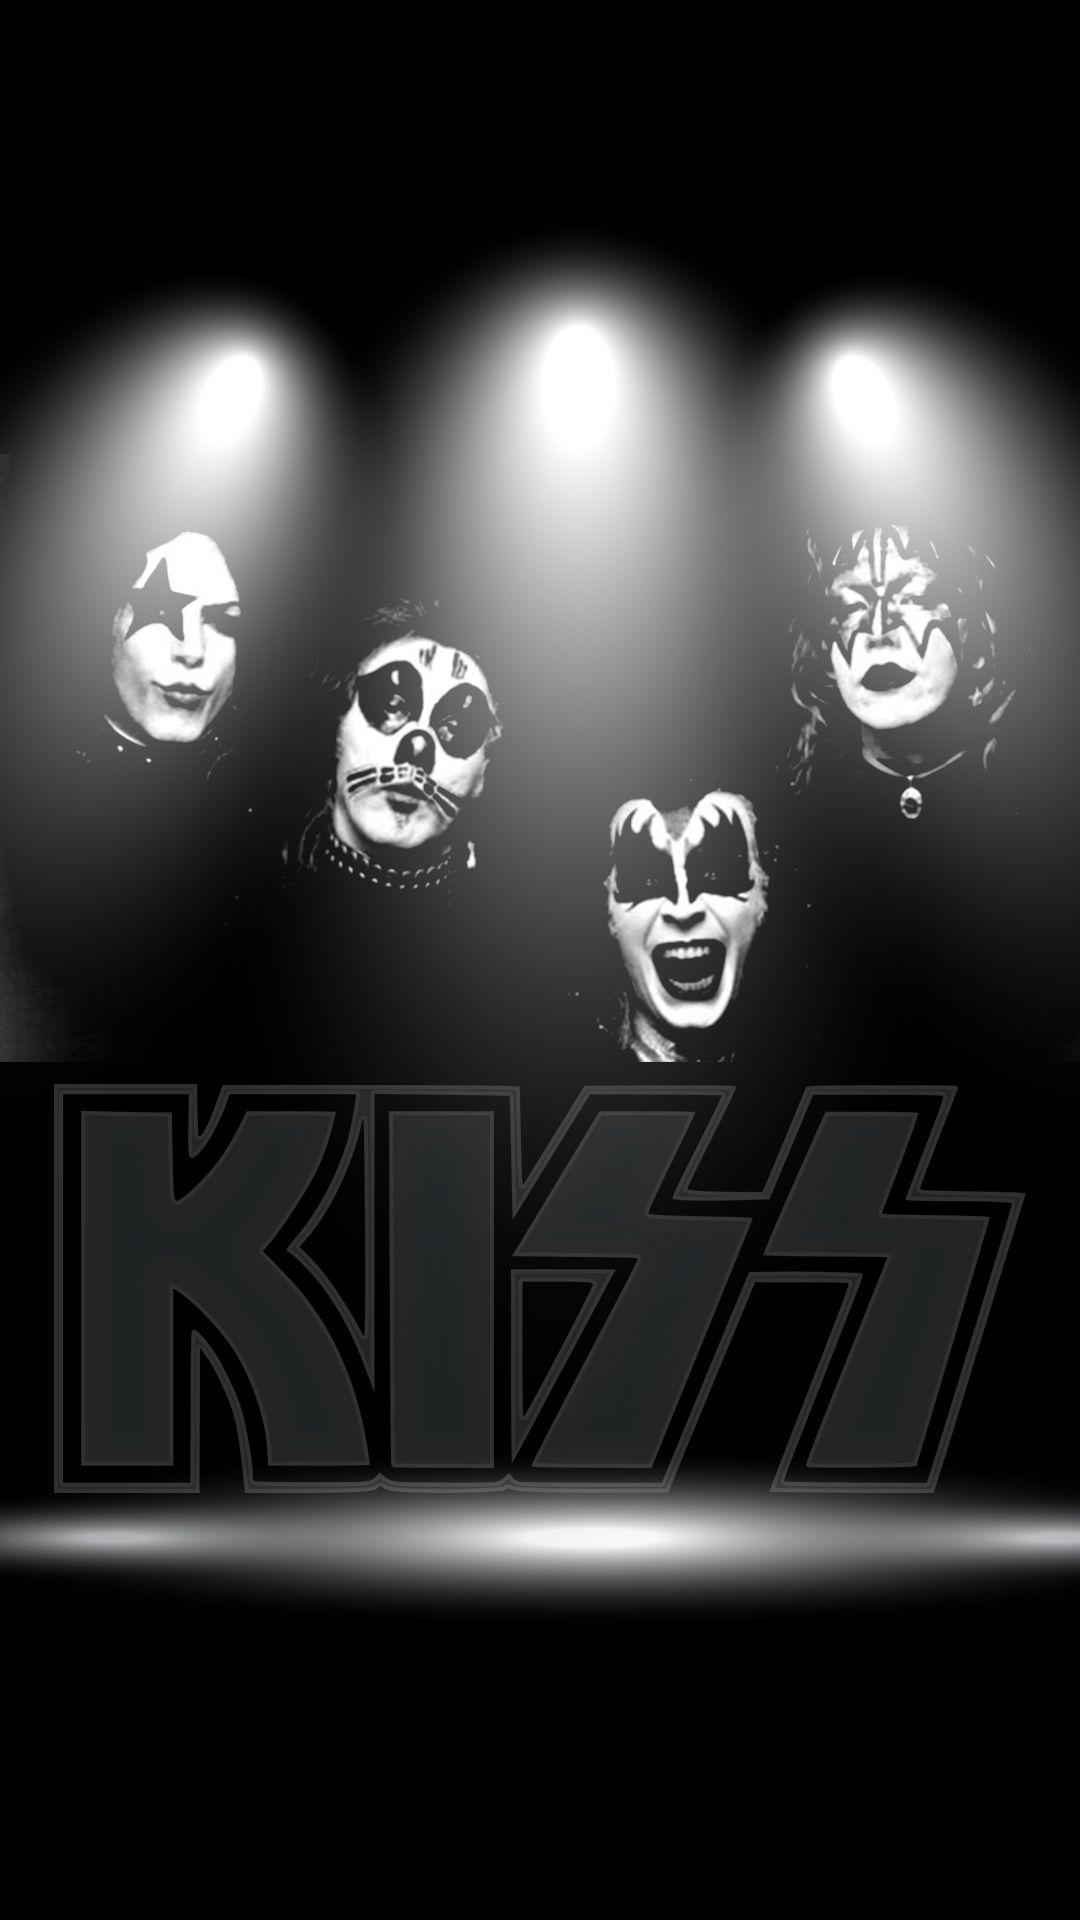 Free HD Kiss Band Phone Wallpaper.4457